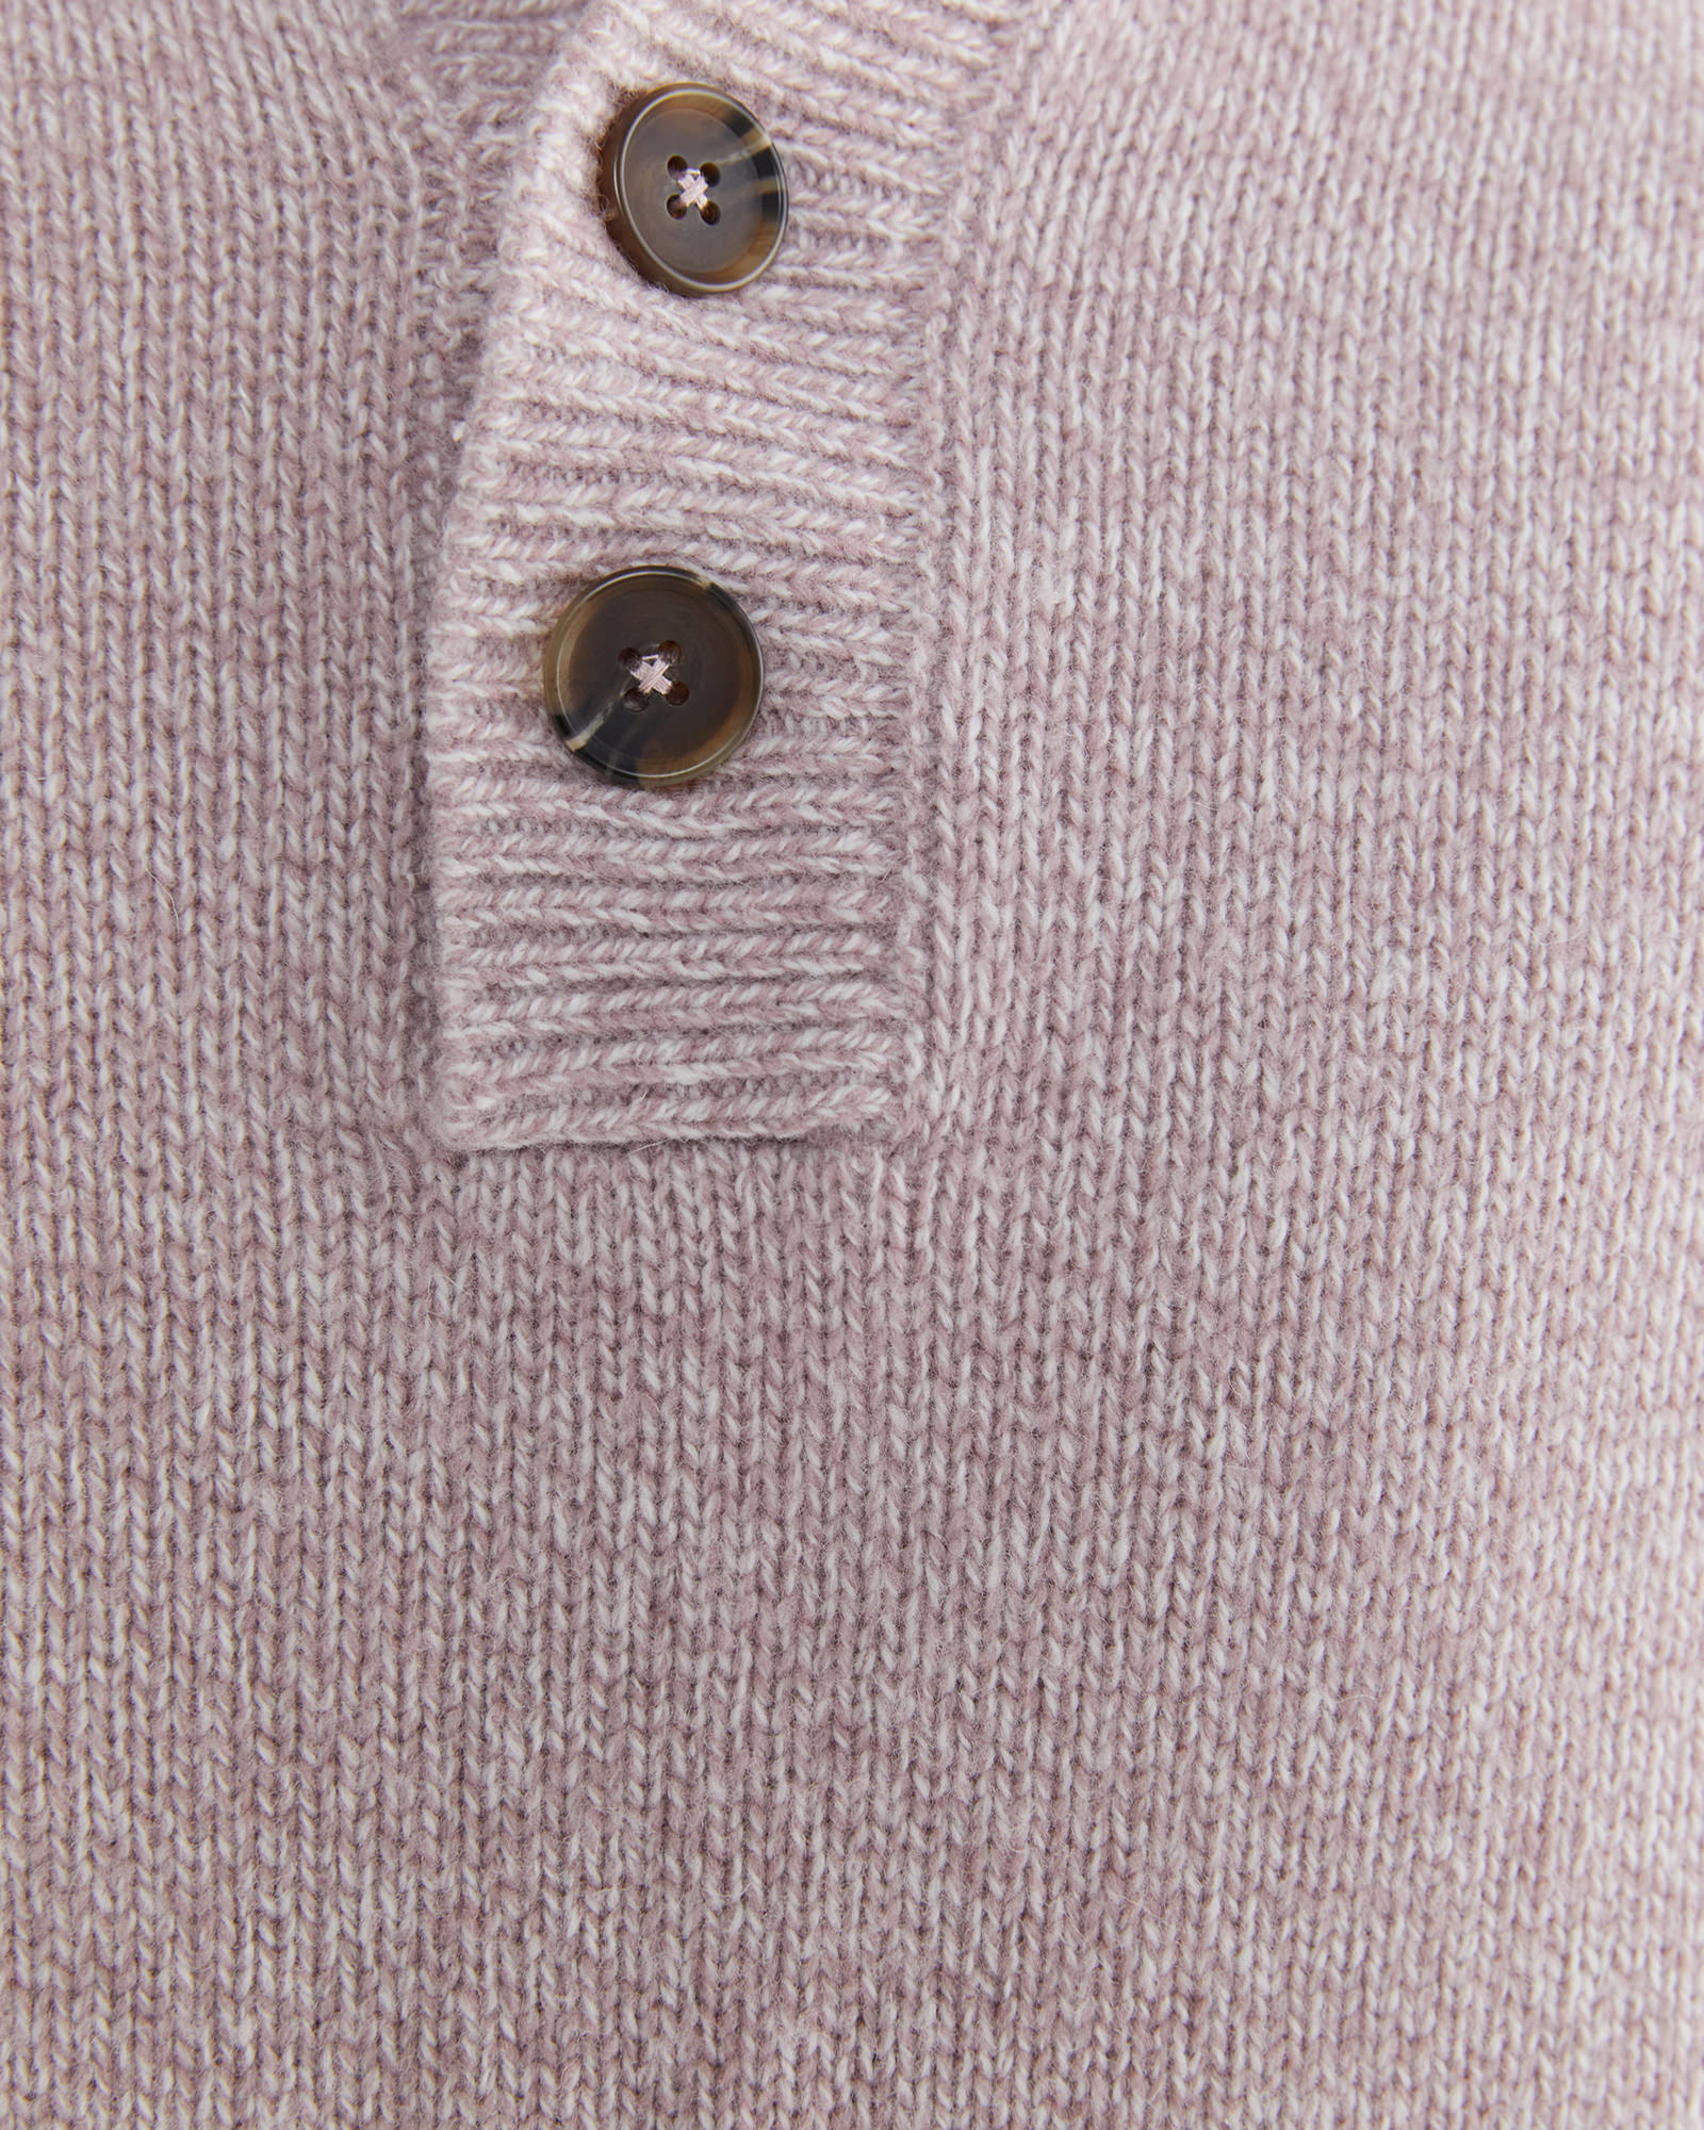 Drysdale Quarter Button Knit in HEATHER